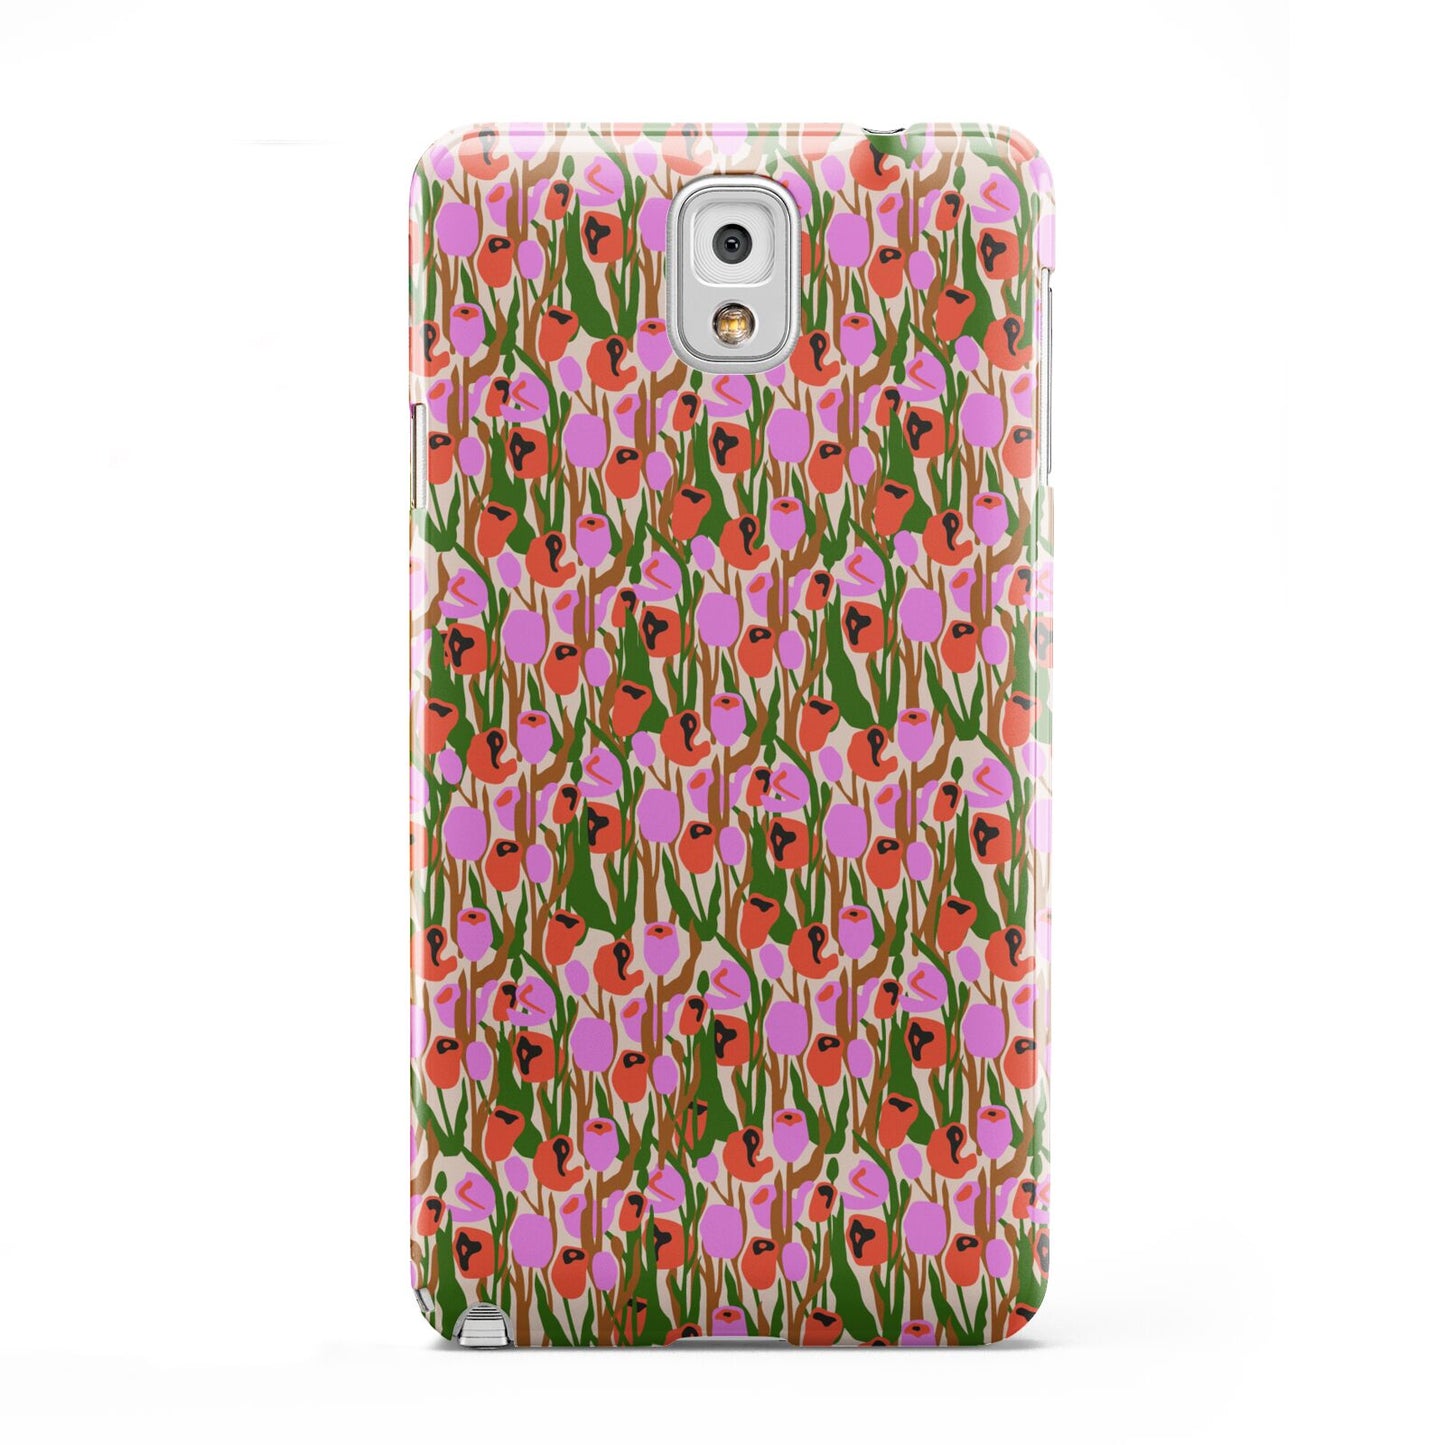 Floral Samsung Galaxy Note 3 Case